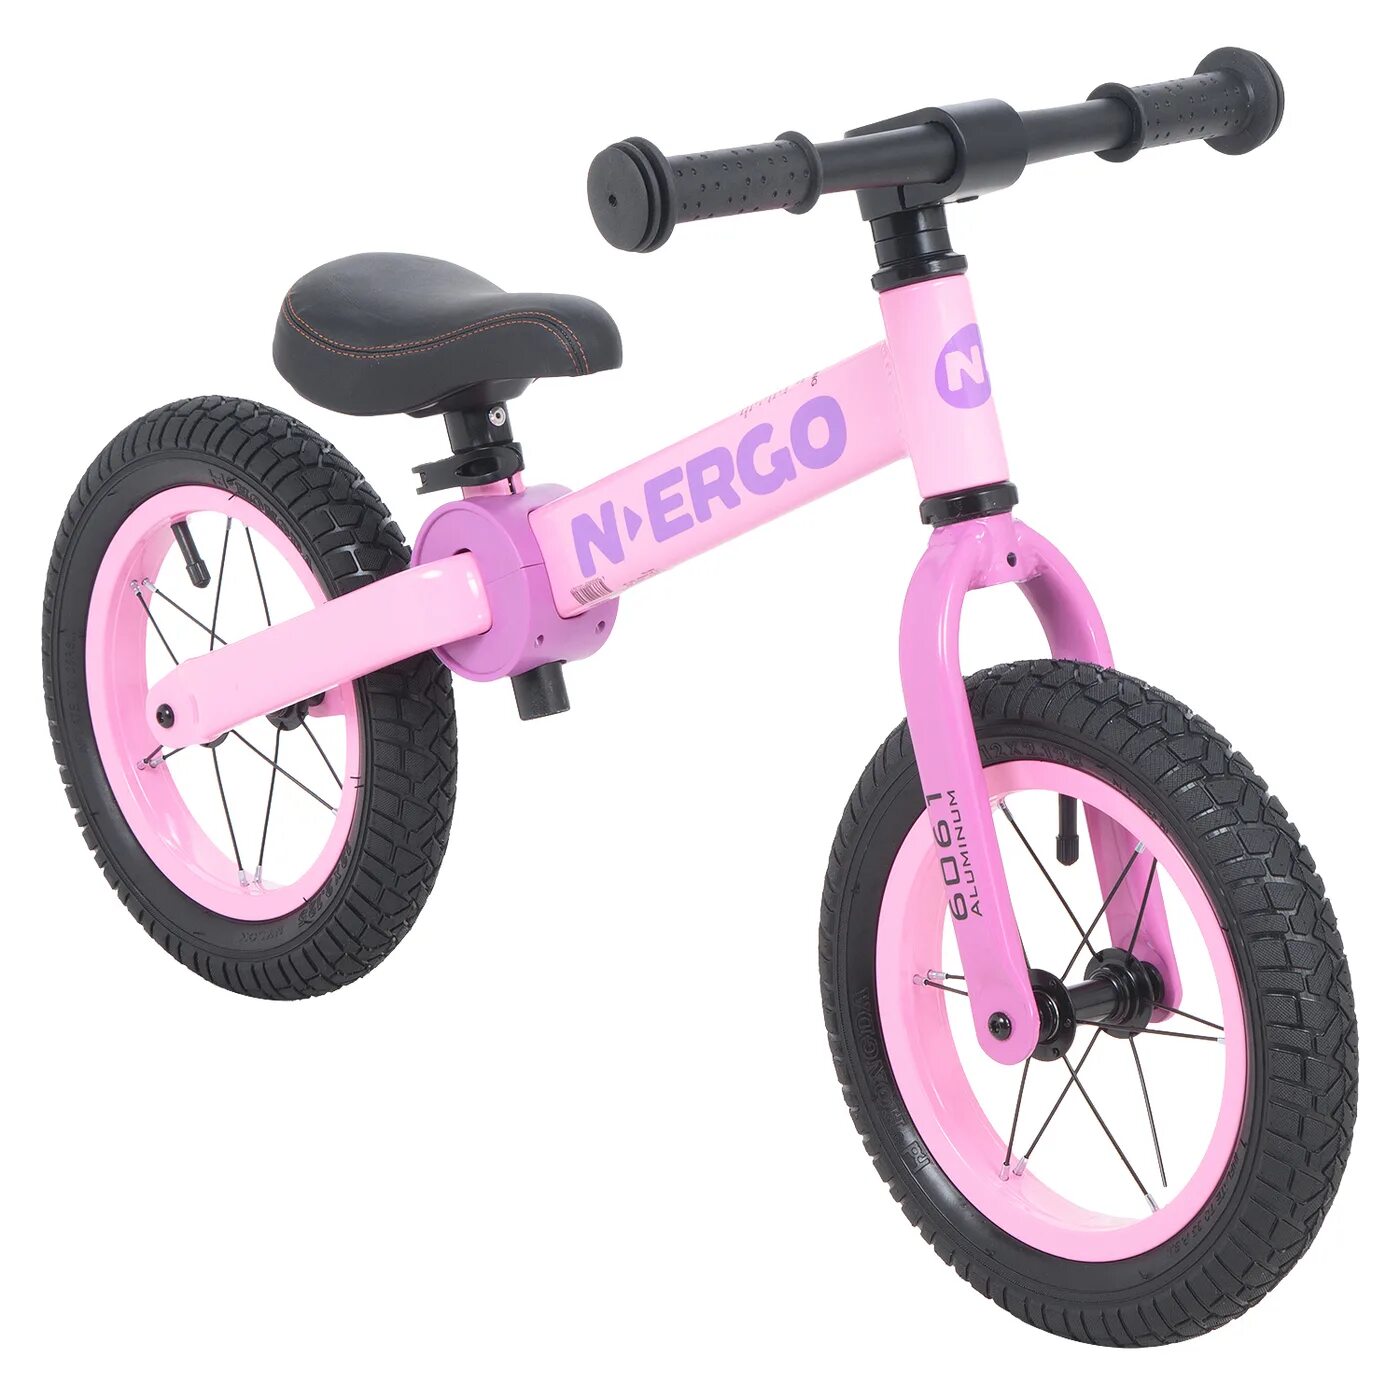 Беговел n. Беговел n.Ergo Aero x3. Беговел n.Ergo Aero x3 Pink. Беговел Kazam Balance Bike v2s. Беговел n.Ergo 4 колеса.